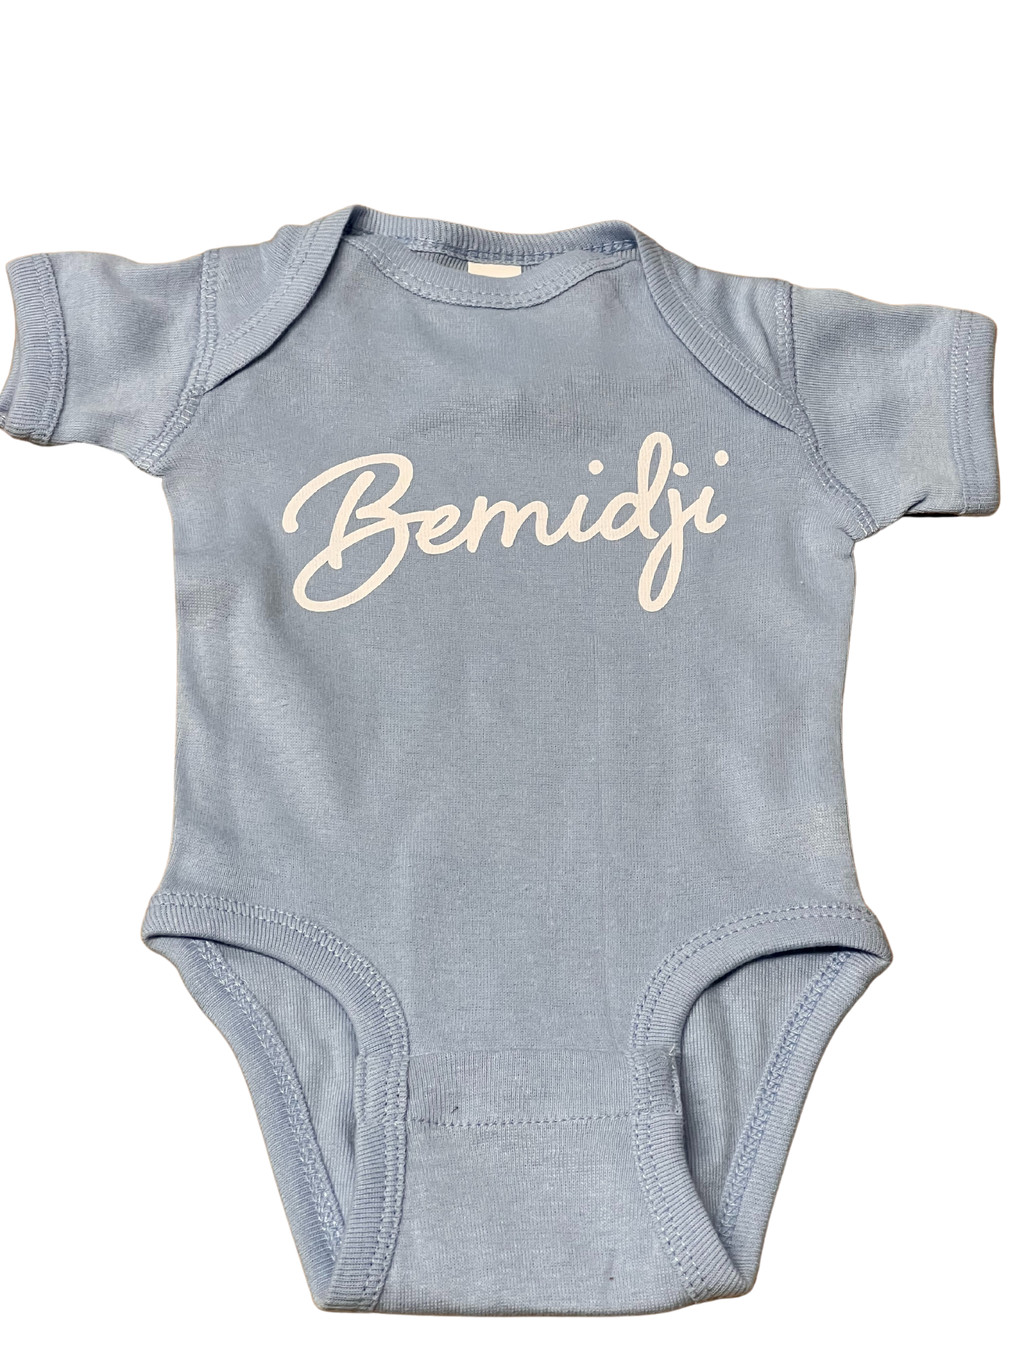 Bemidji Onesie - Medium Blue Baby Onesie